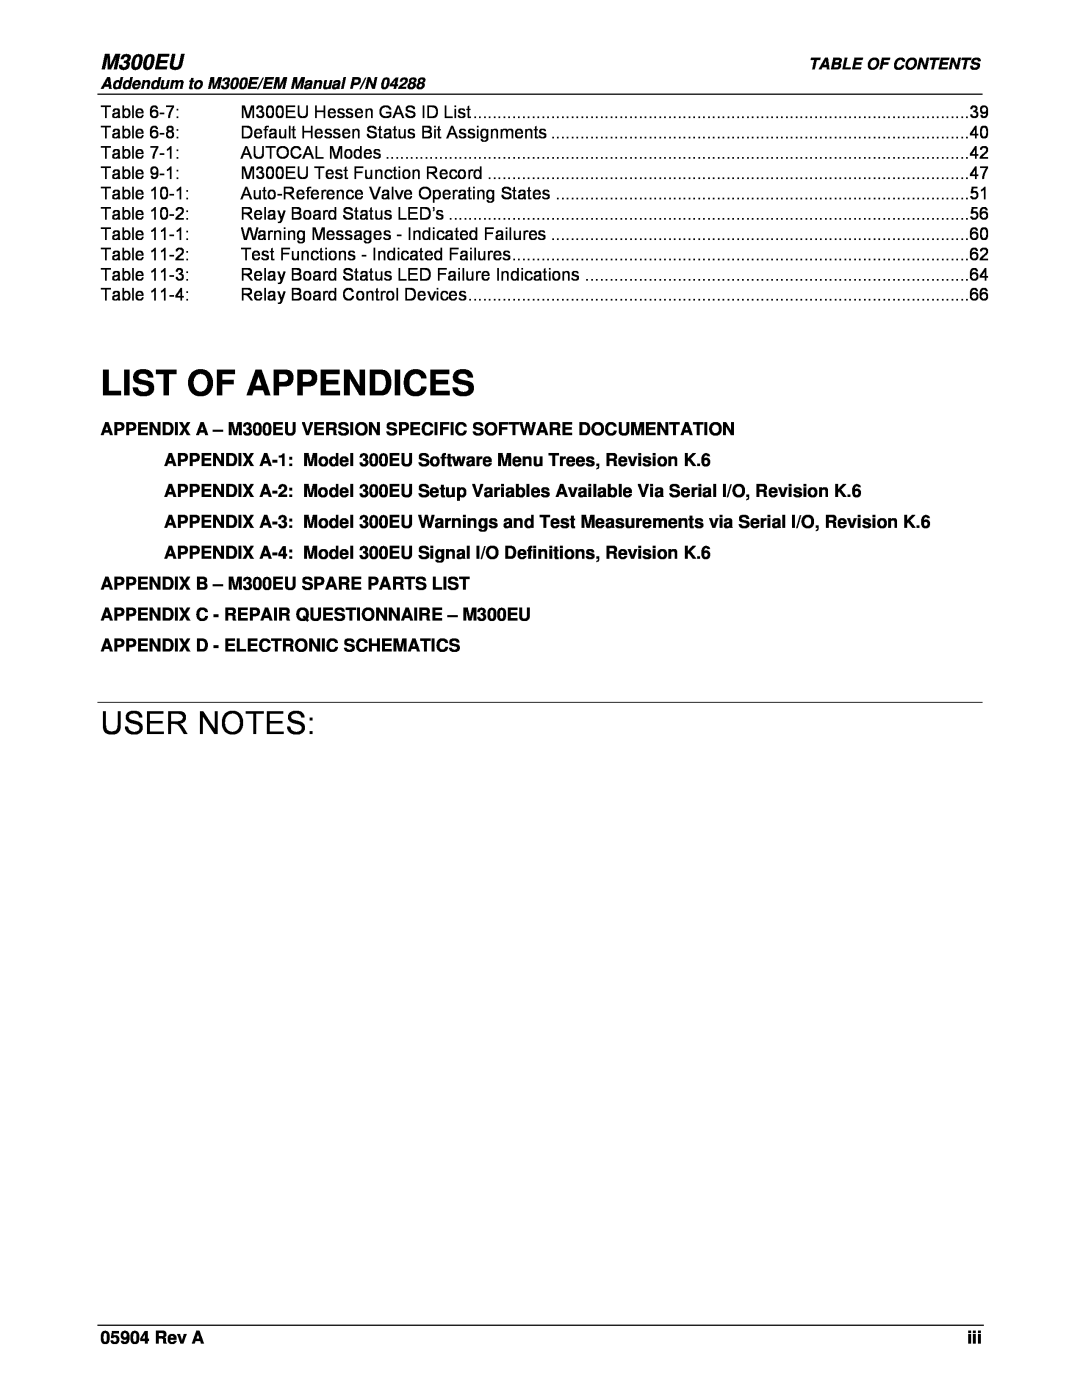 Teledyne List Of Appendices, User Notes, M300EU, APPENDIX A-4 Model 300EU Signal I/O Definitions, Revision K.6, Rev A 